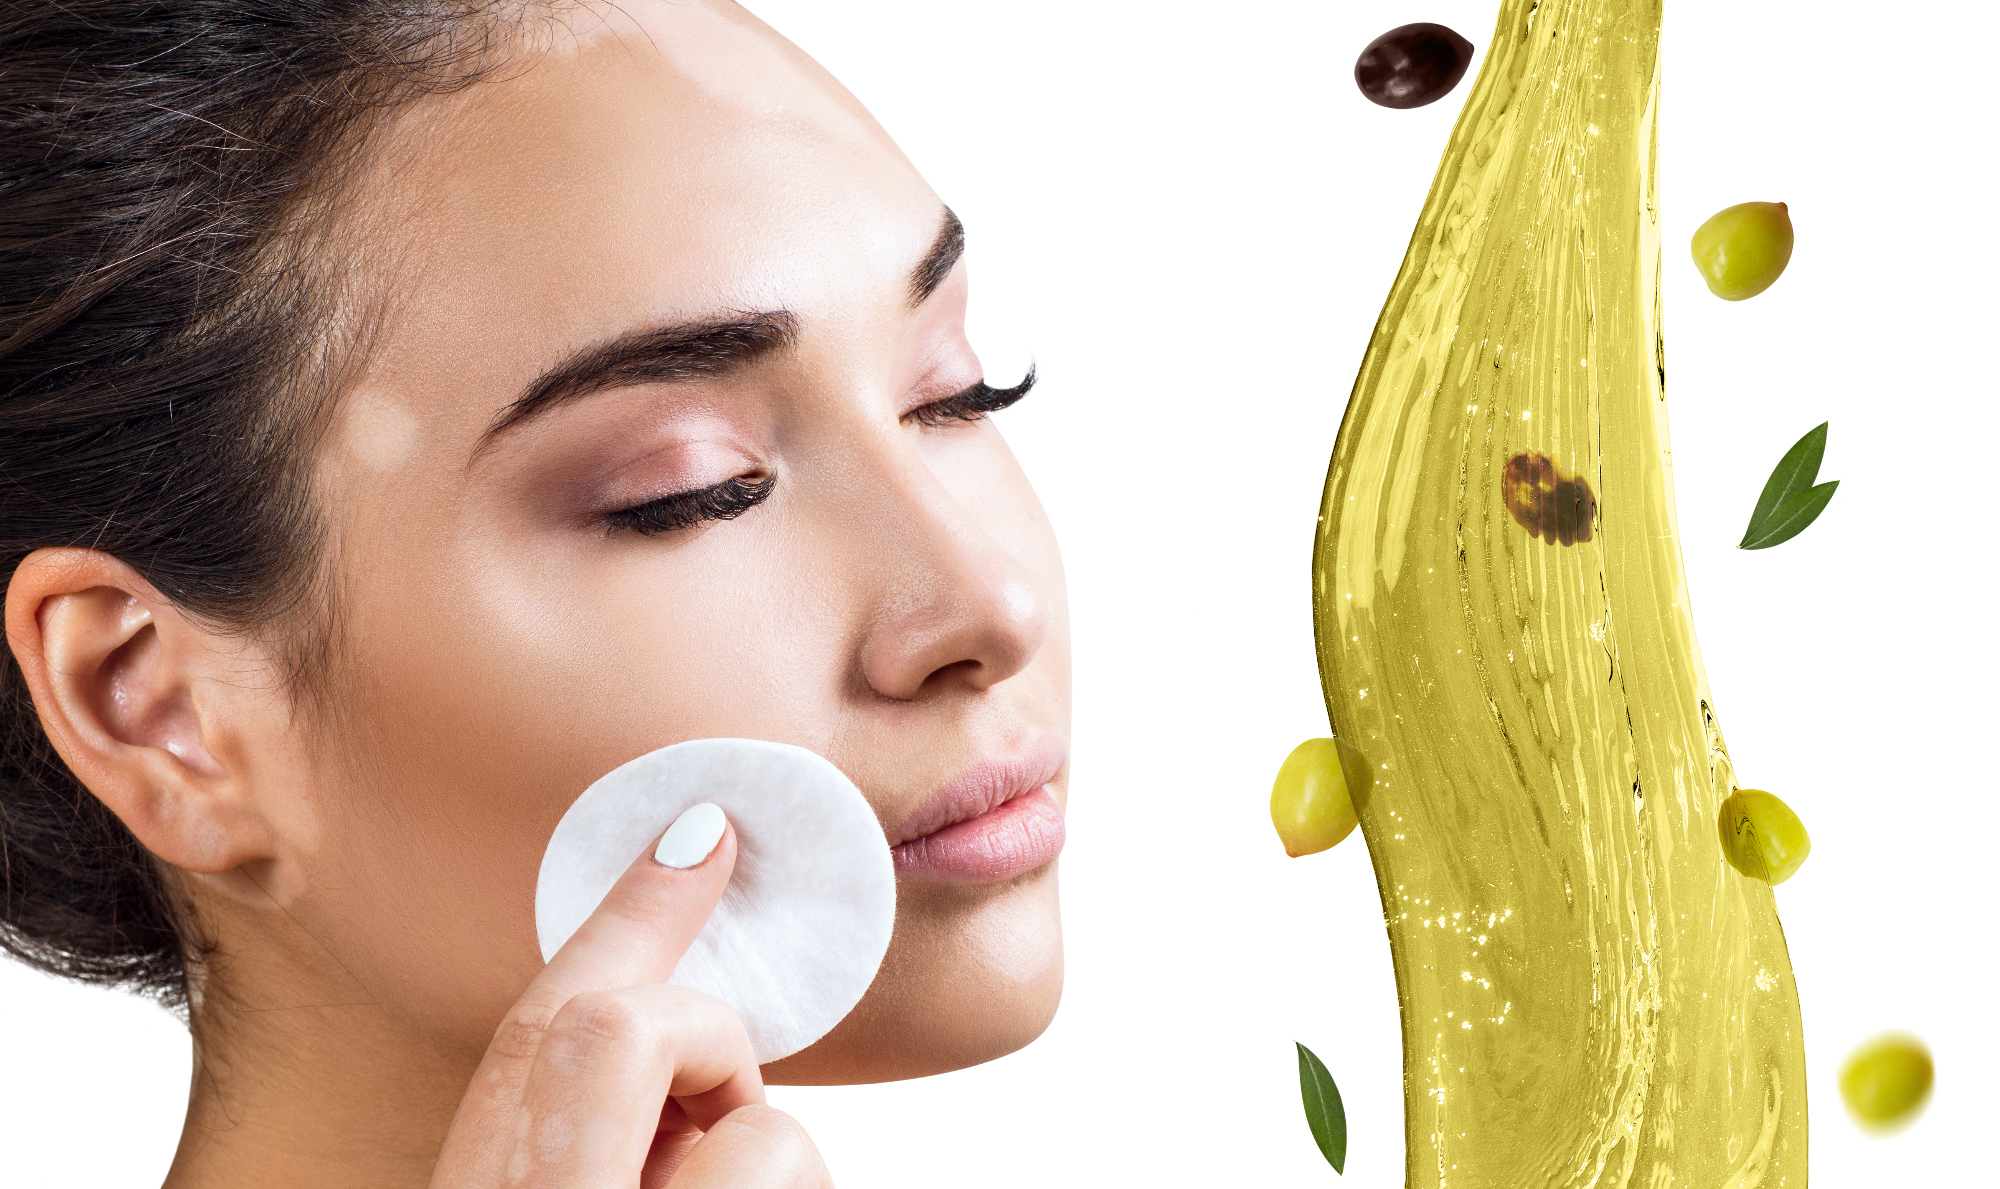 Olivno olje za obraz ima ogromno pozitivnih učinkov